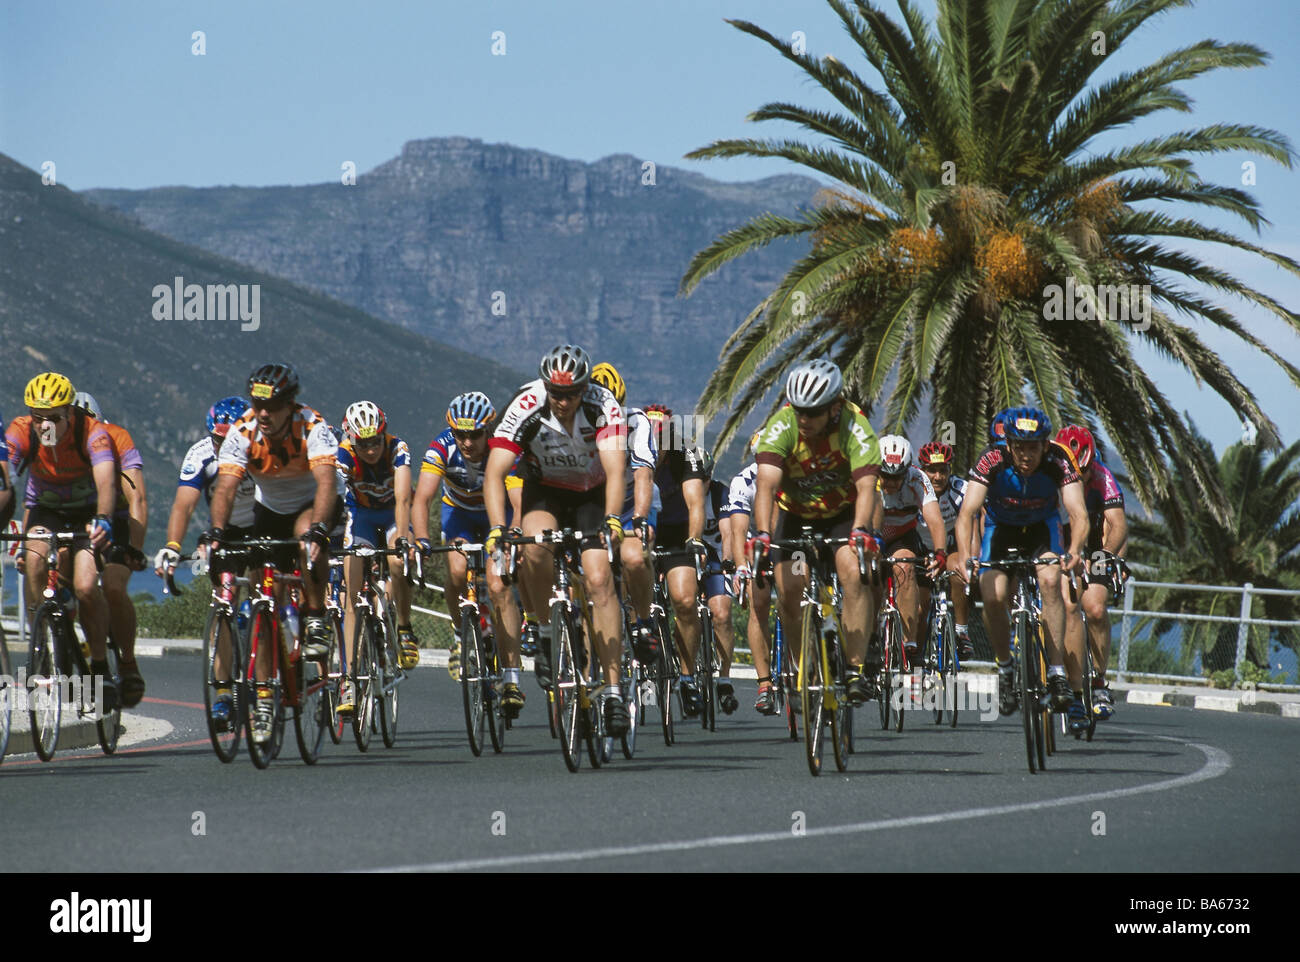 Argus Rennen Clifton rettet Laufwerke Treiber Fahrräder Gruppe Kap-Provinz Kapstadt Menschen in Afrika palm Provinz West-Kap Stockfoto